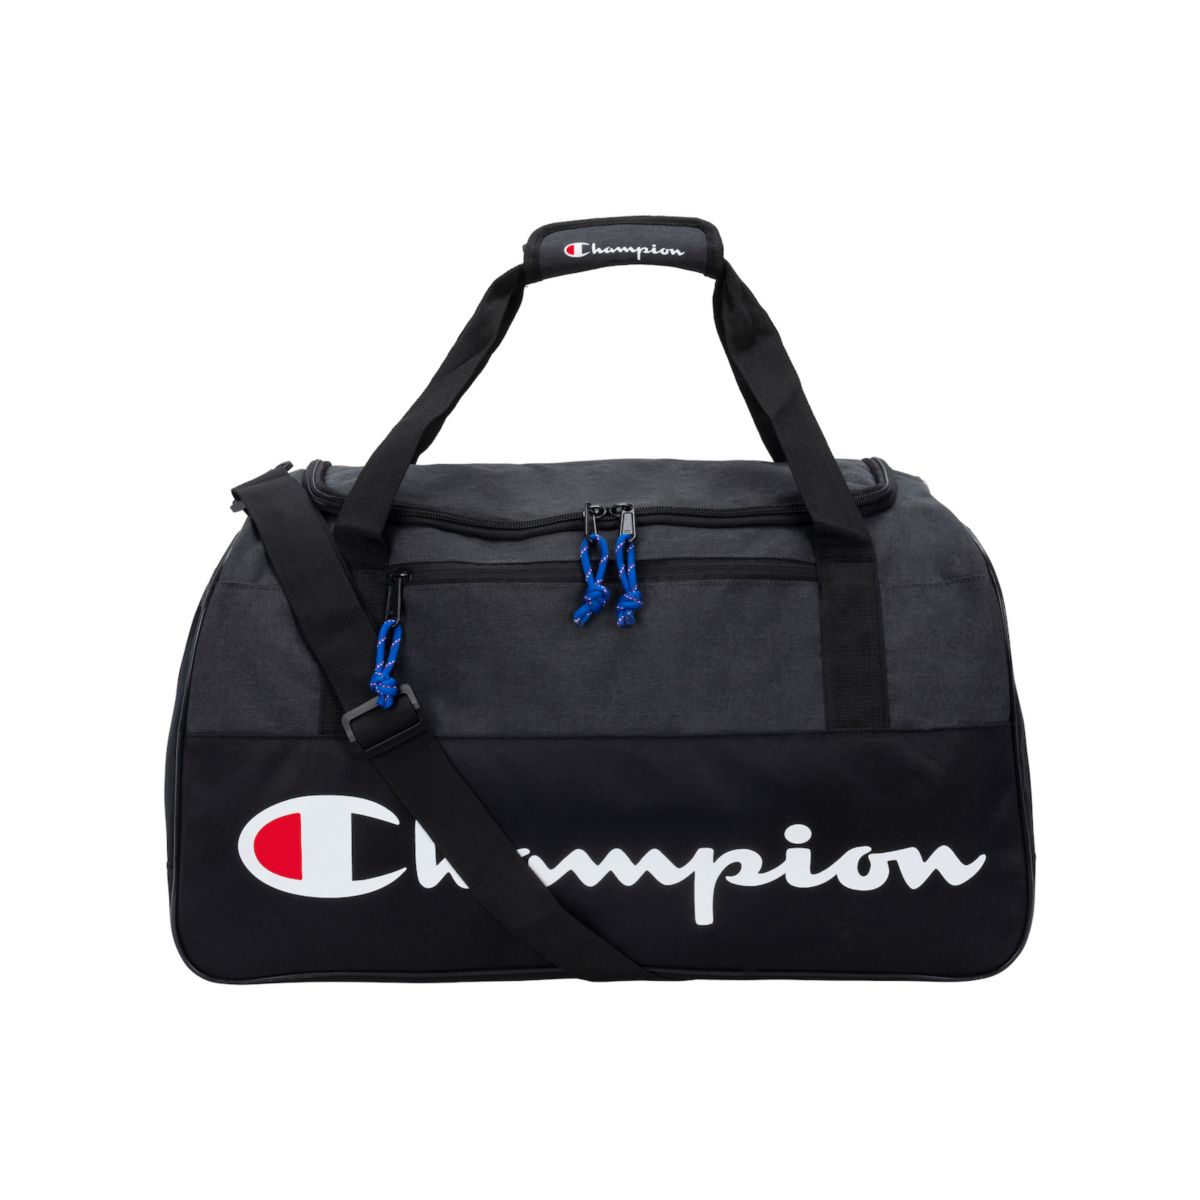 Спортивная сумка Champion® Utility среднего размера Champion